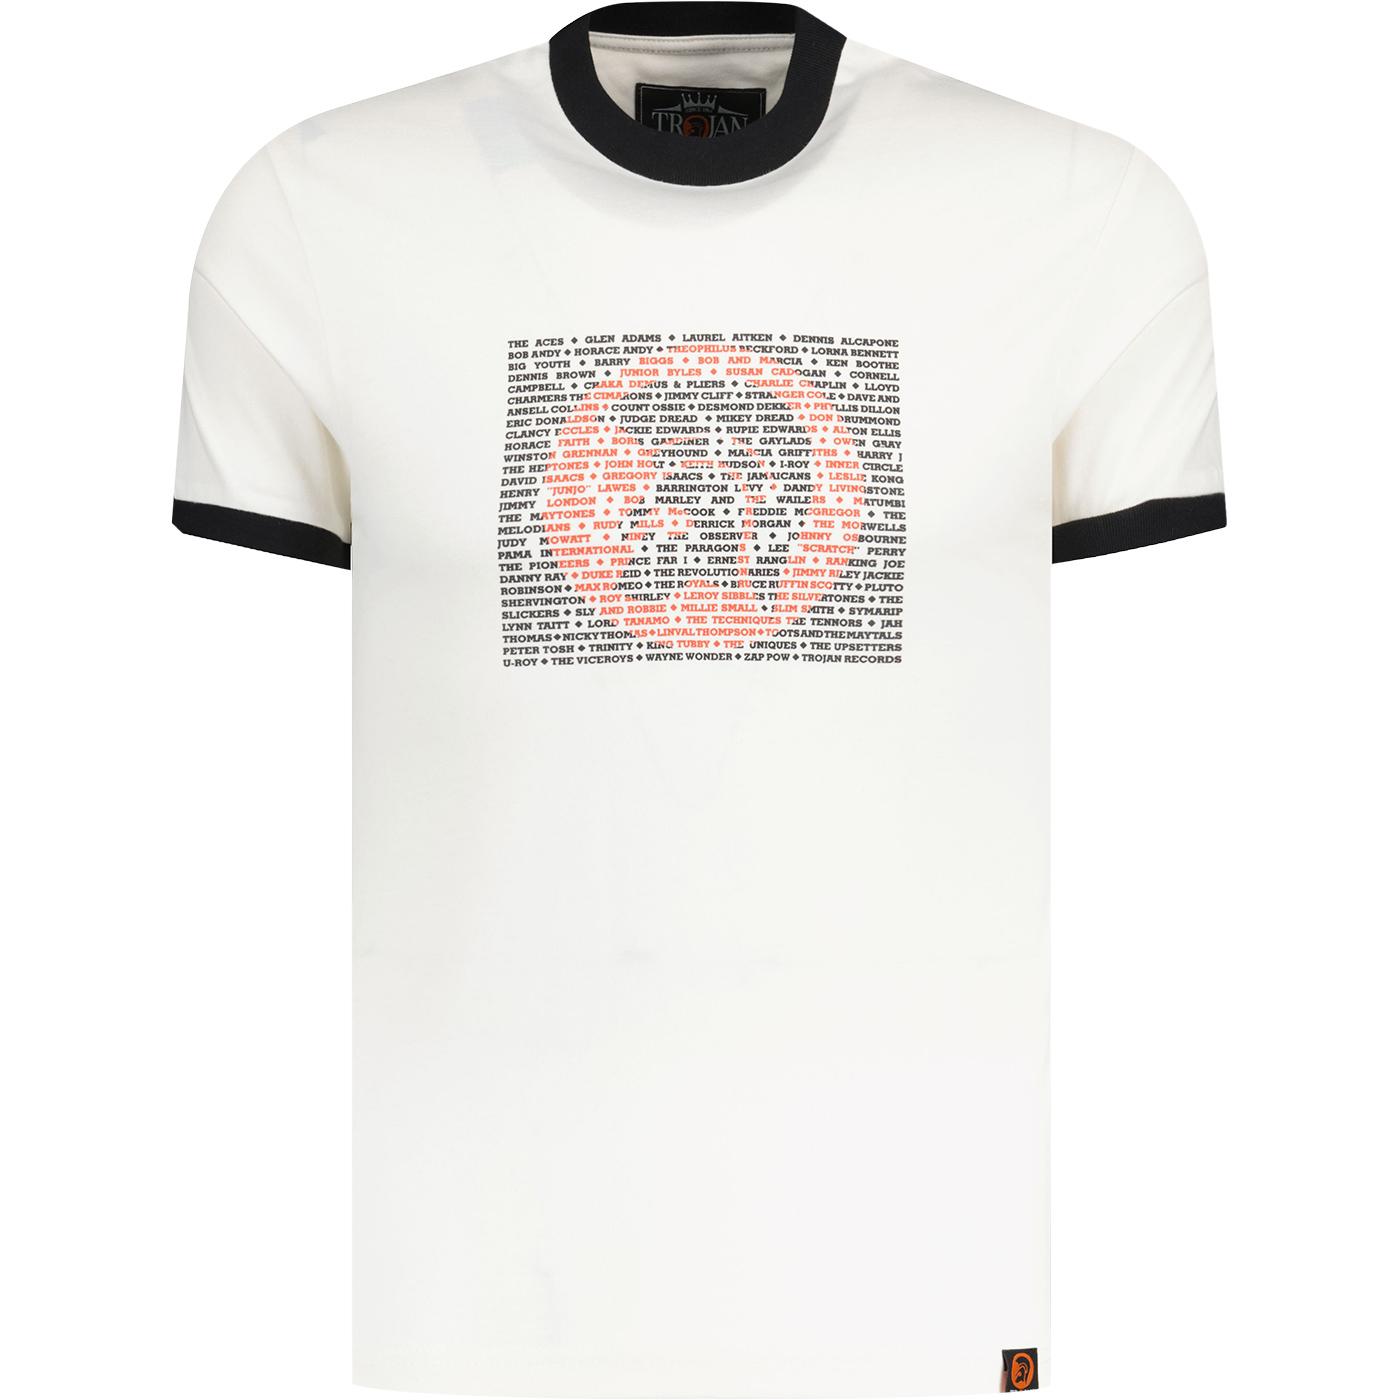 Trojan Records Artist Logo Retro Ringer T-shirt E